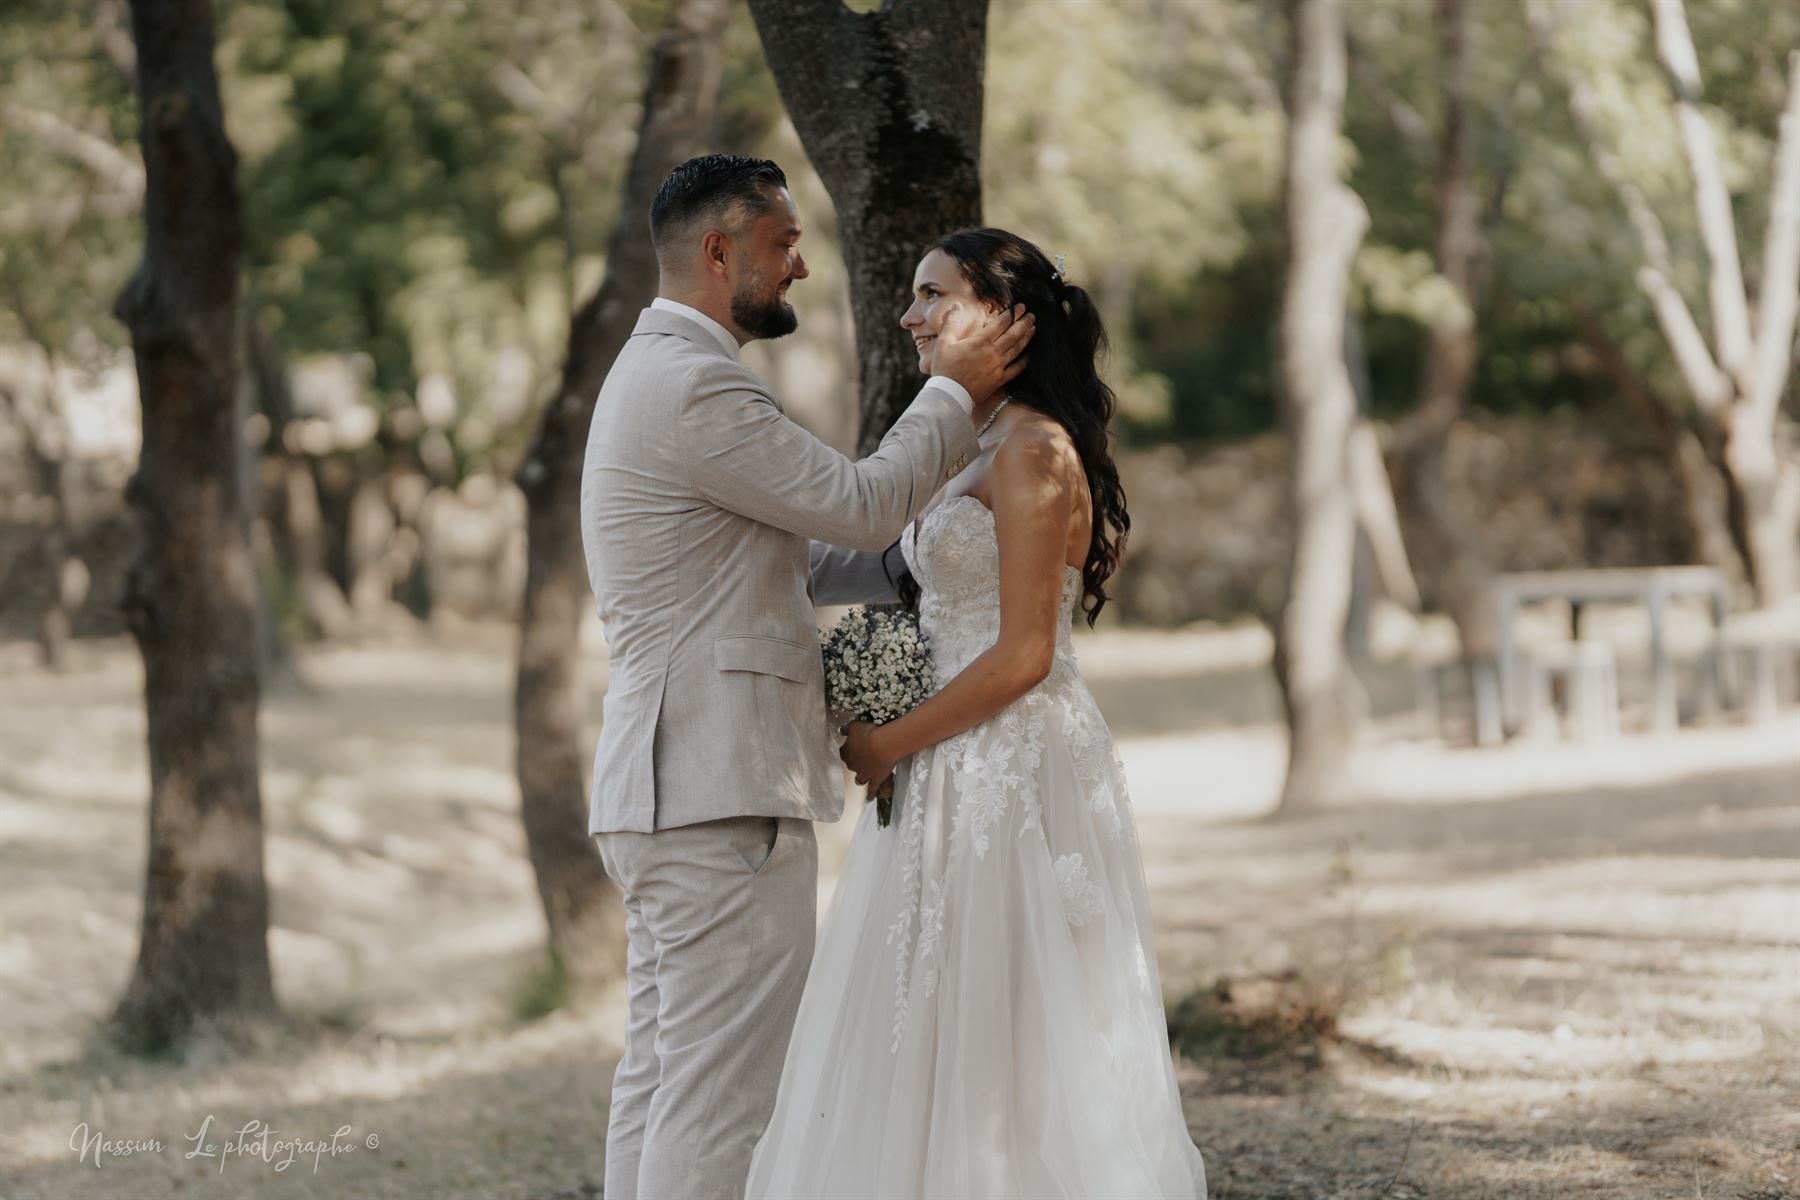 Wedding Photographer Aix en Provence: Capturing Love's Embrace 1